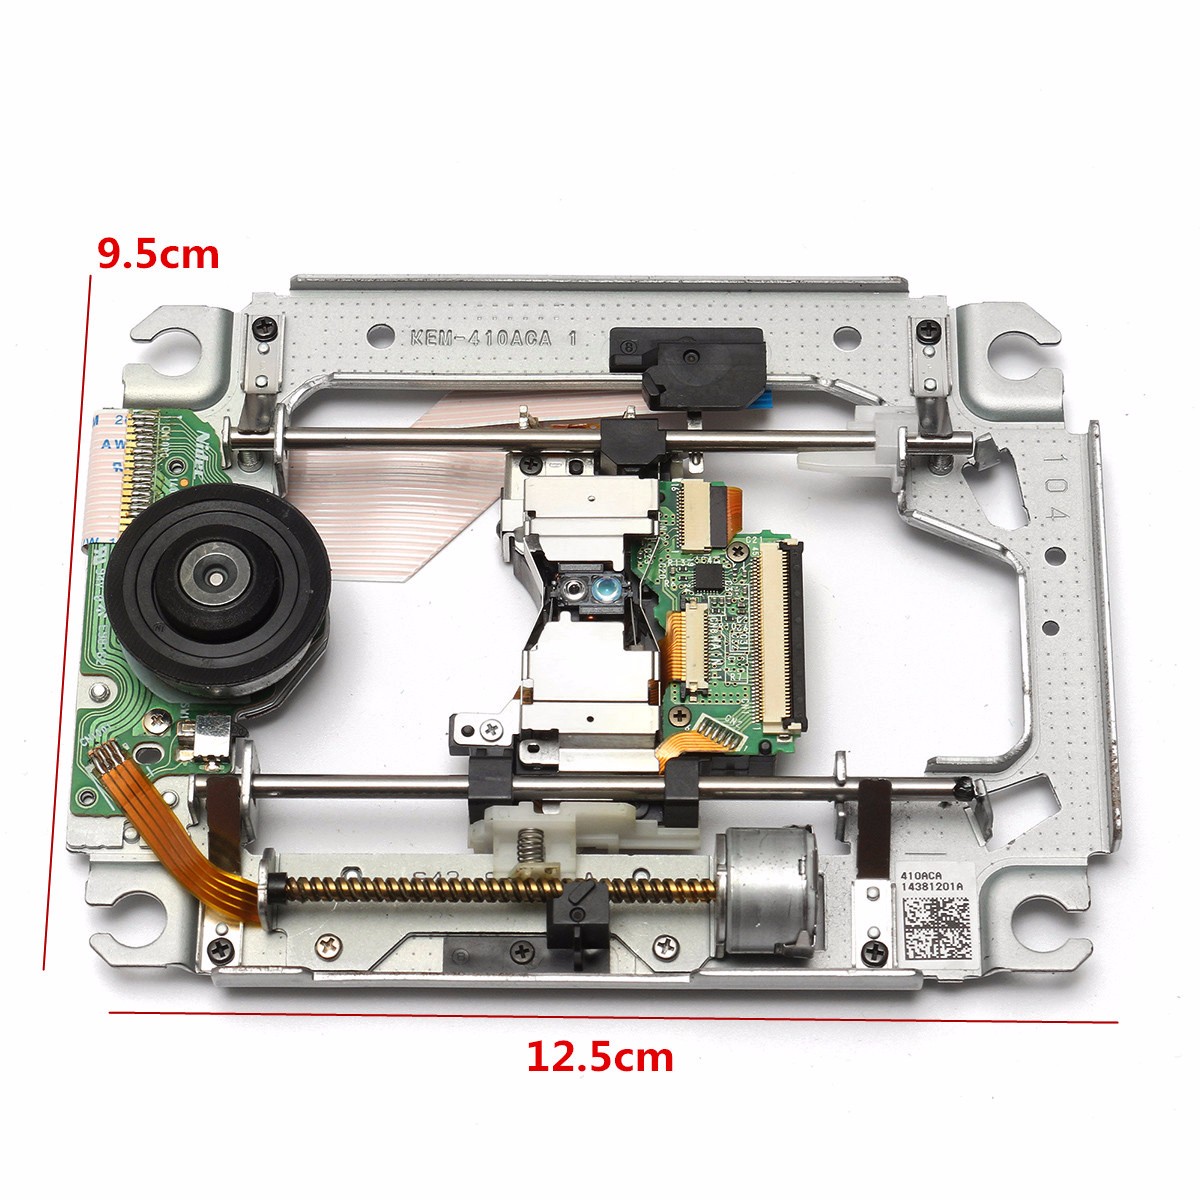 KES-410ACA/410A KEM-410ACA Laser Lens & Deck for Play Station 3 for PS3 Parts 1